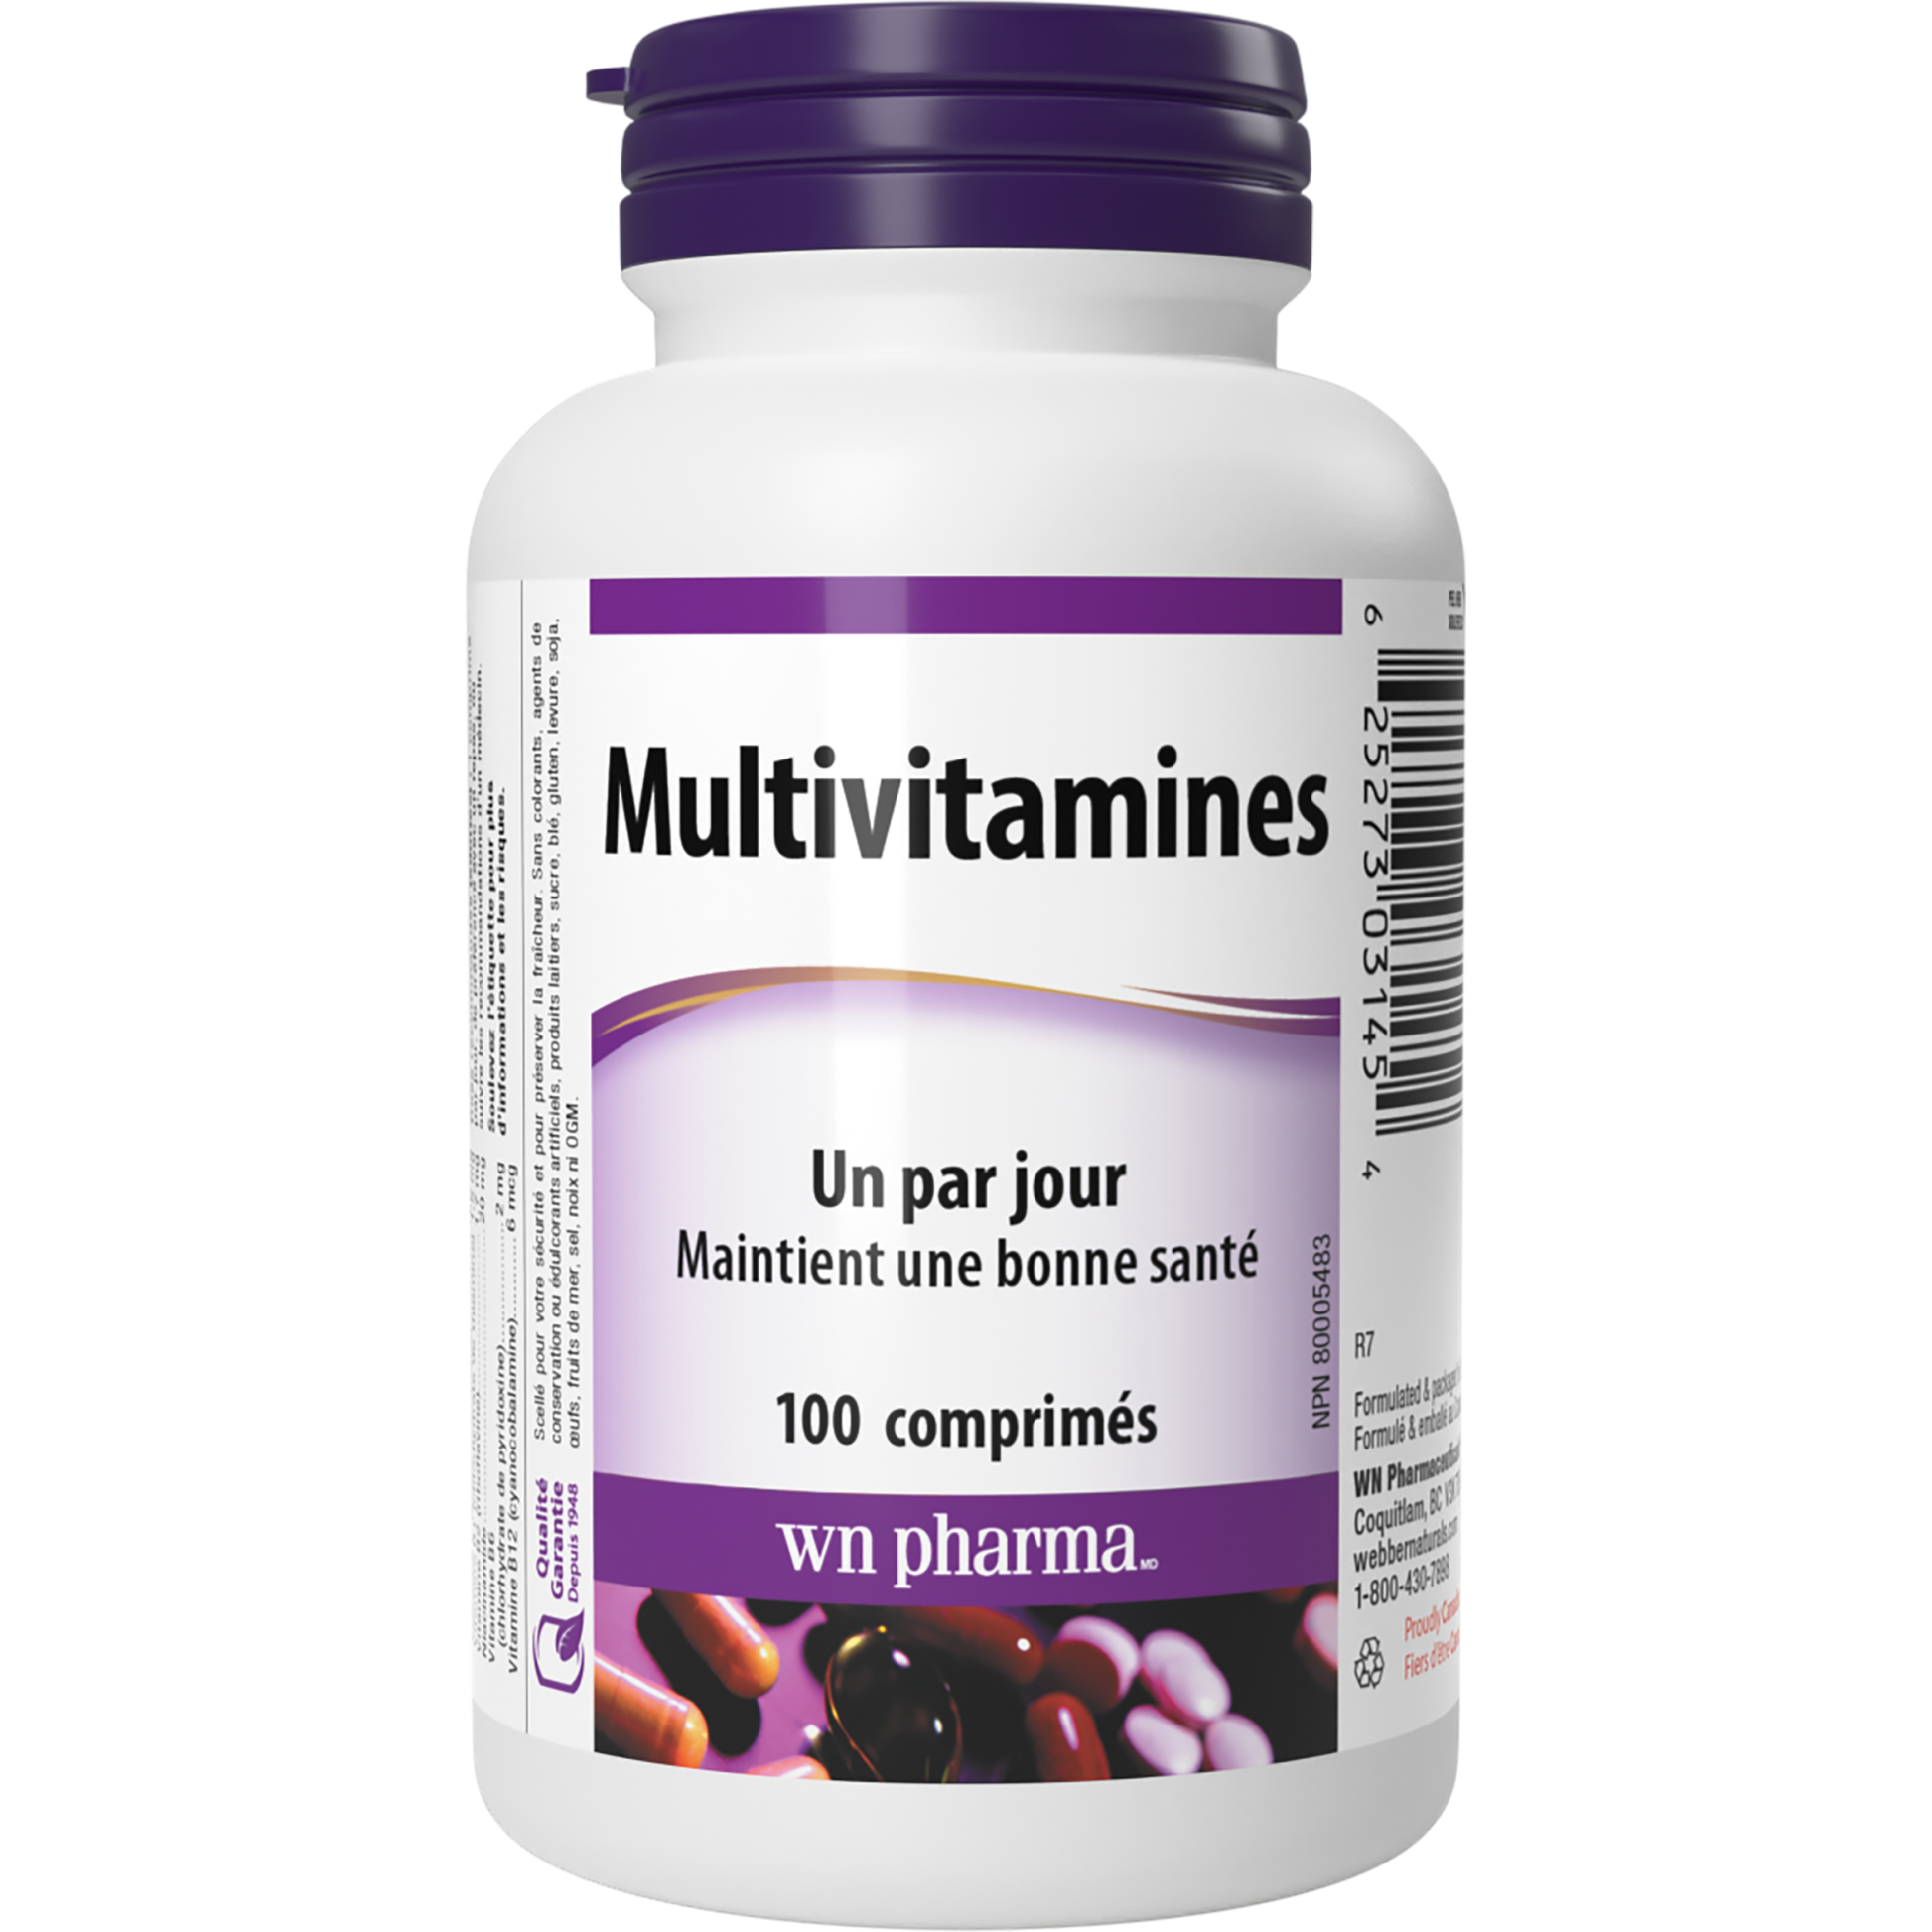 Multivitamines Un par jour for WN Pharma®|v|hi-res|WN3145